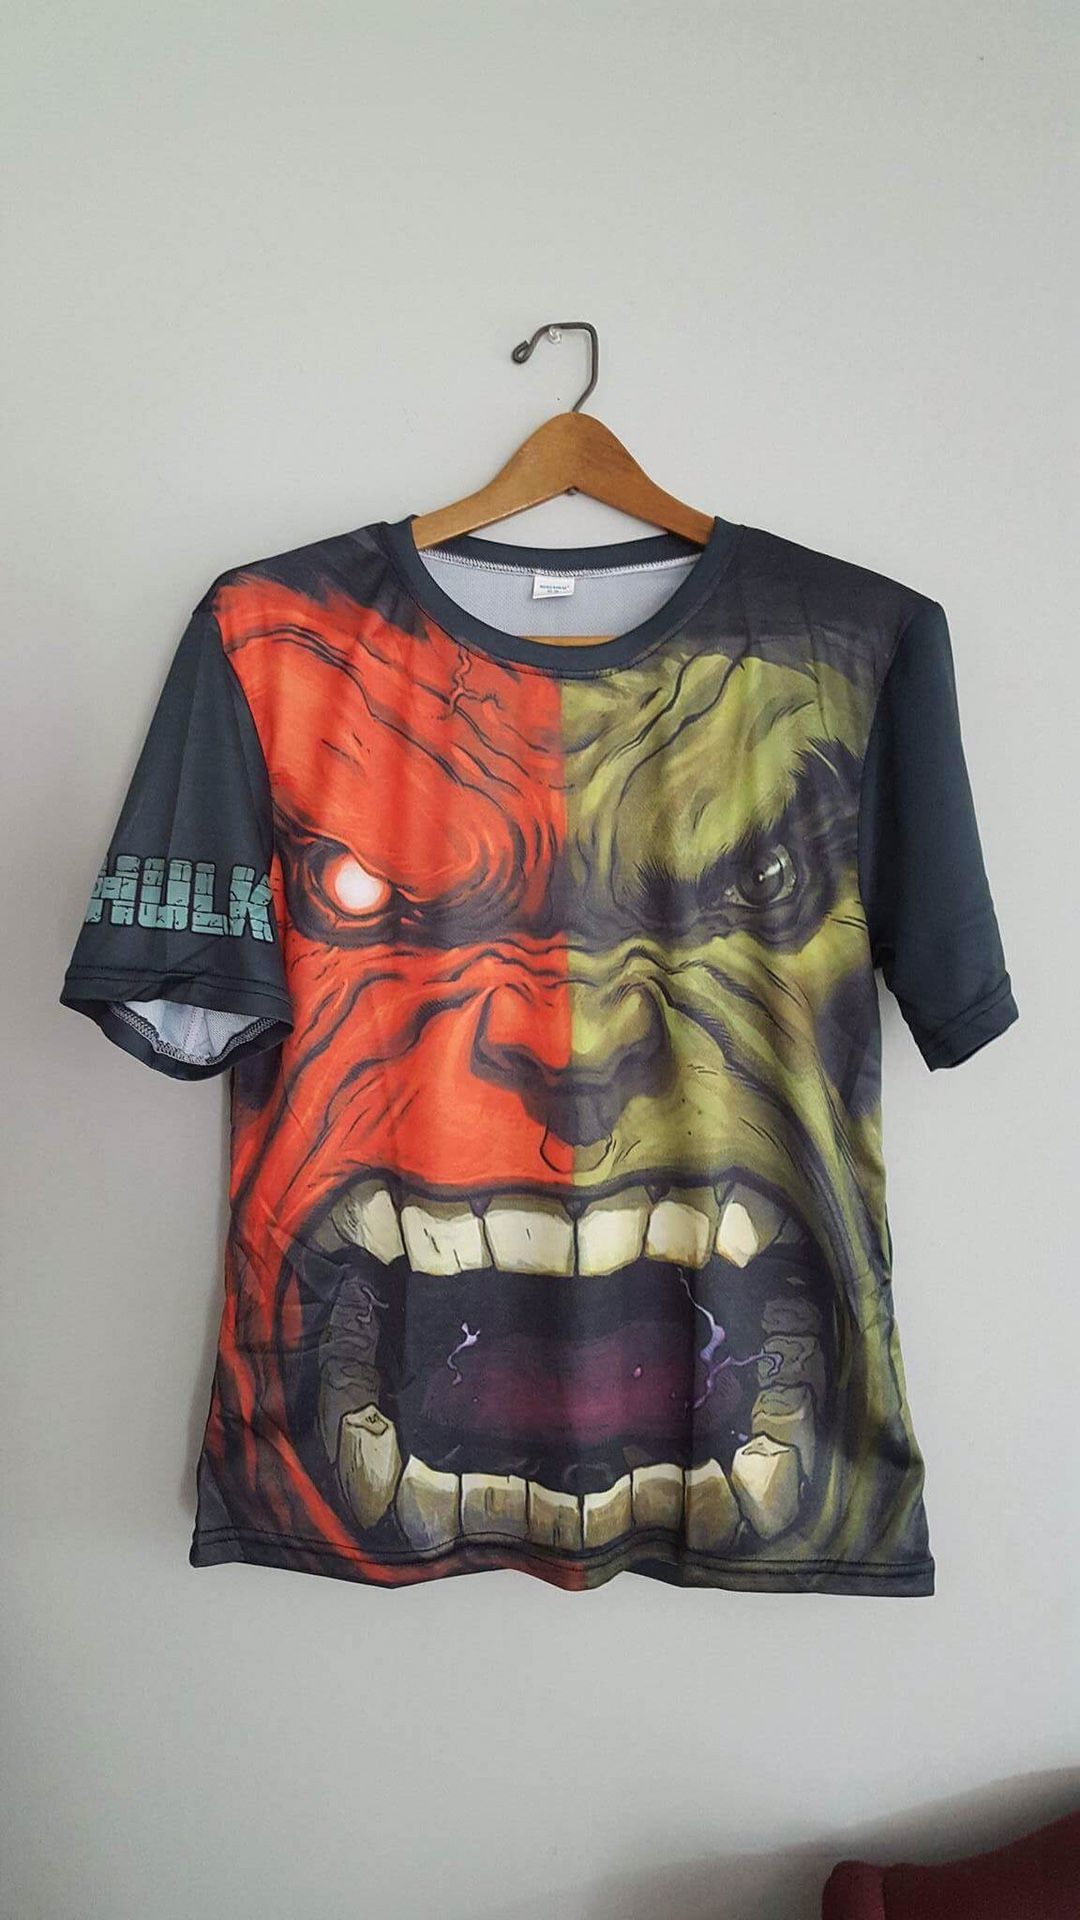 Hulk shirt size M